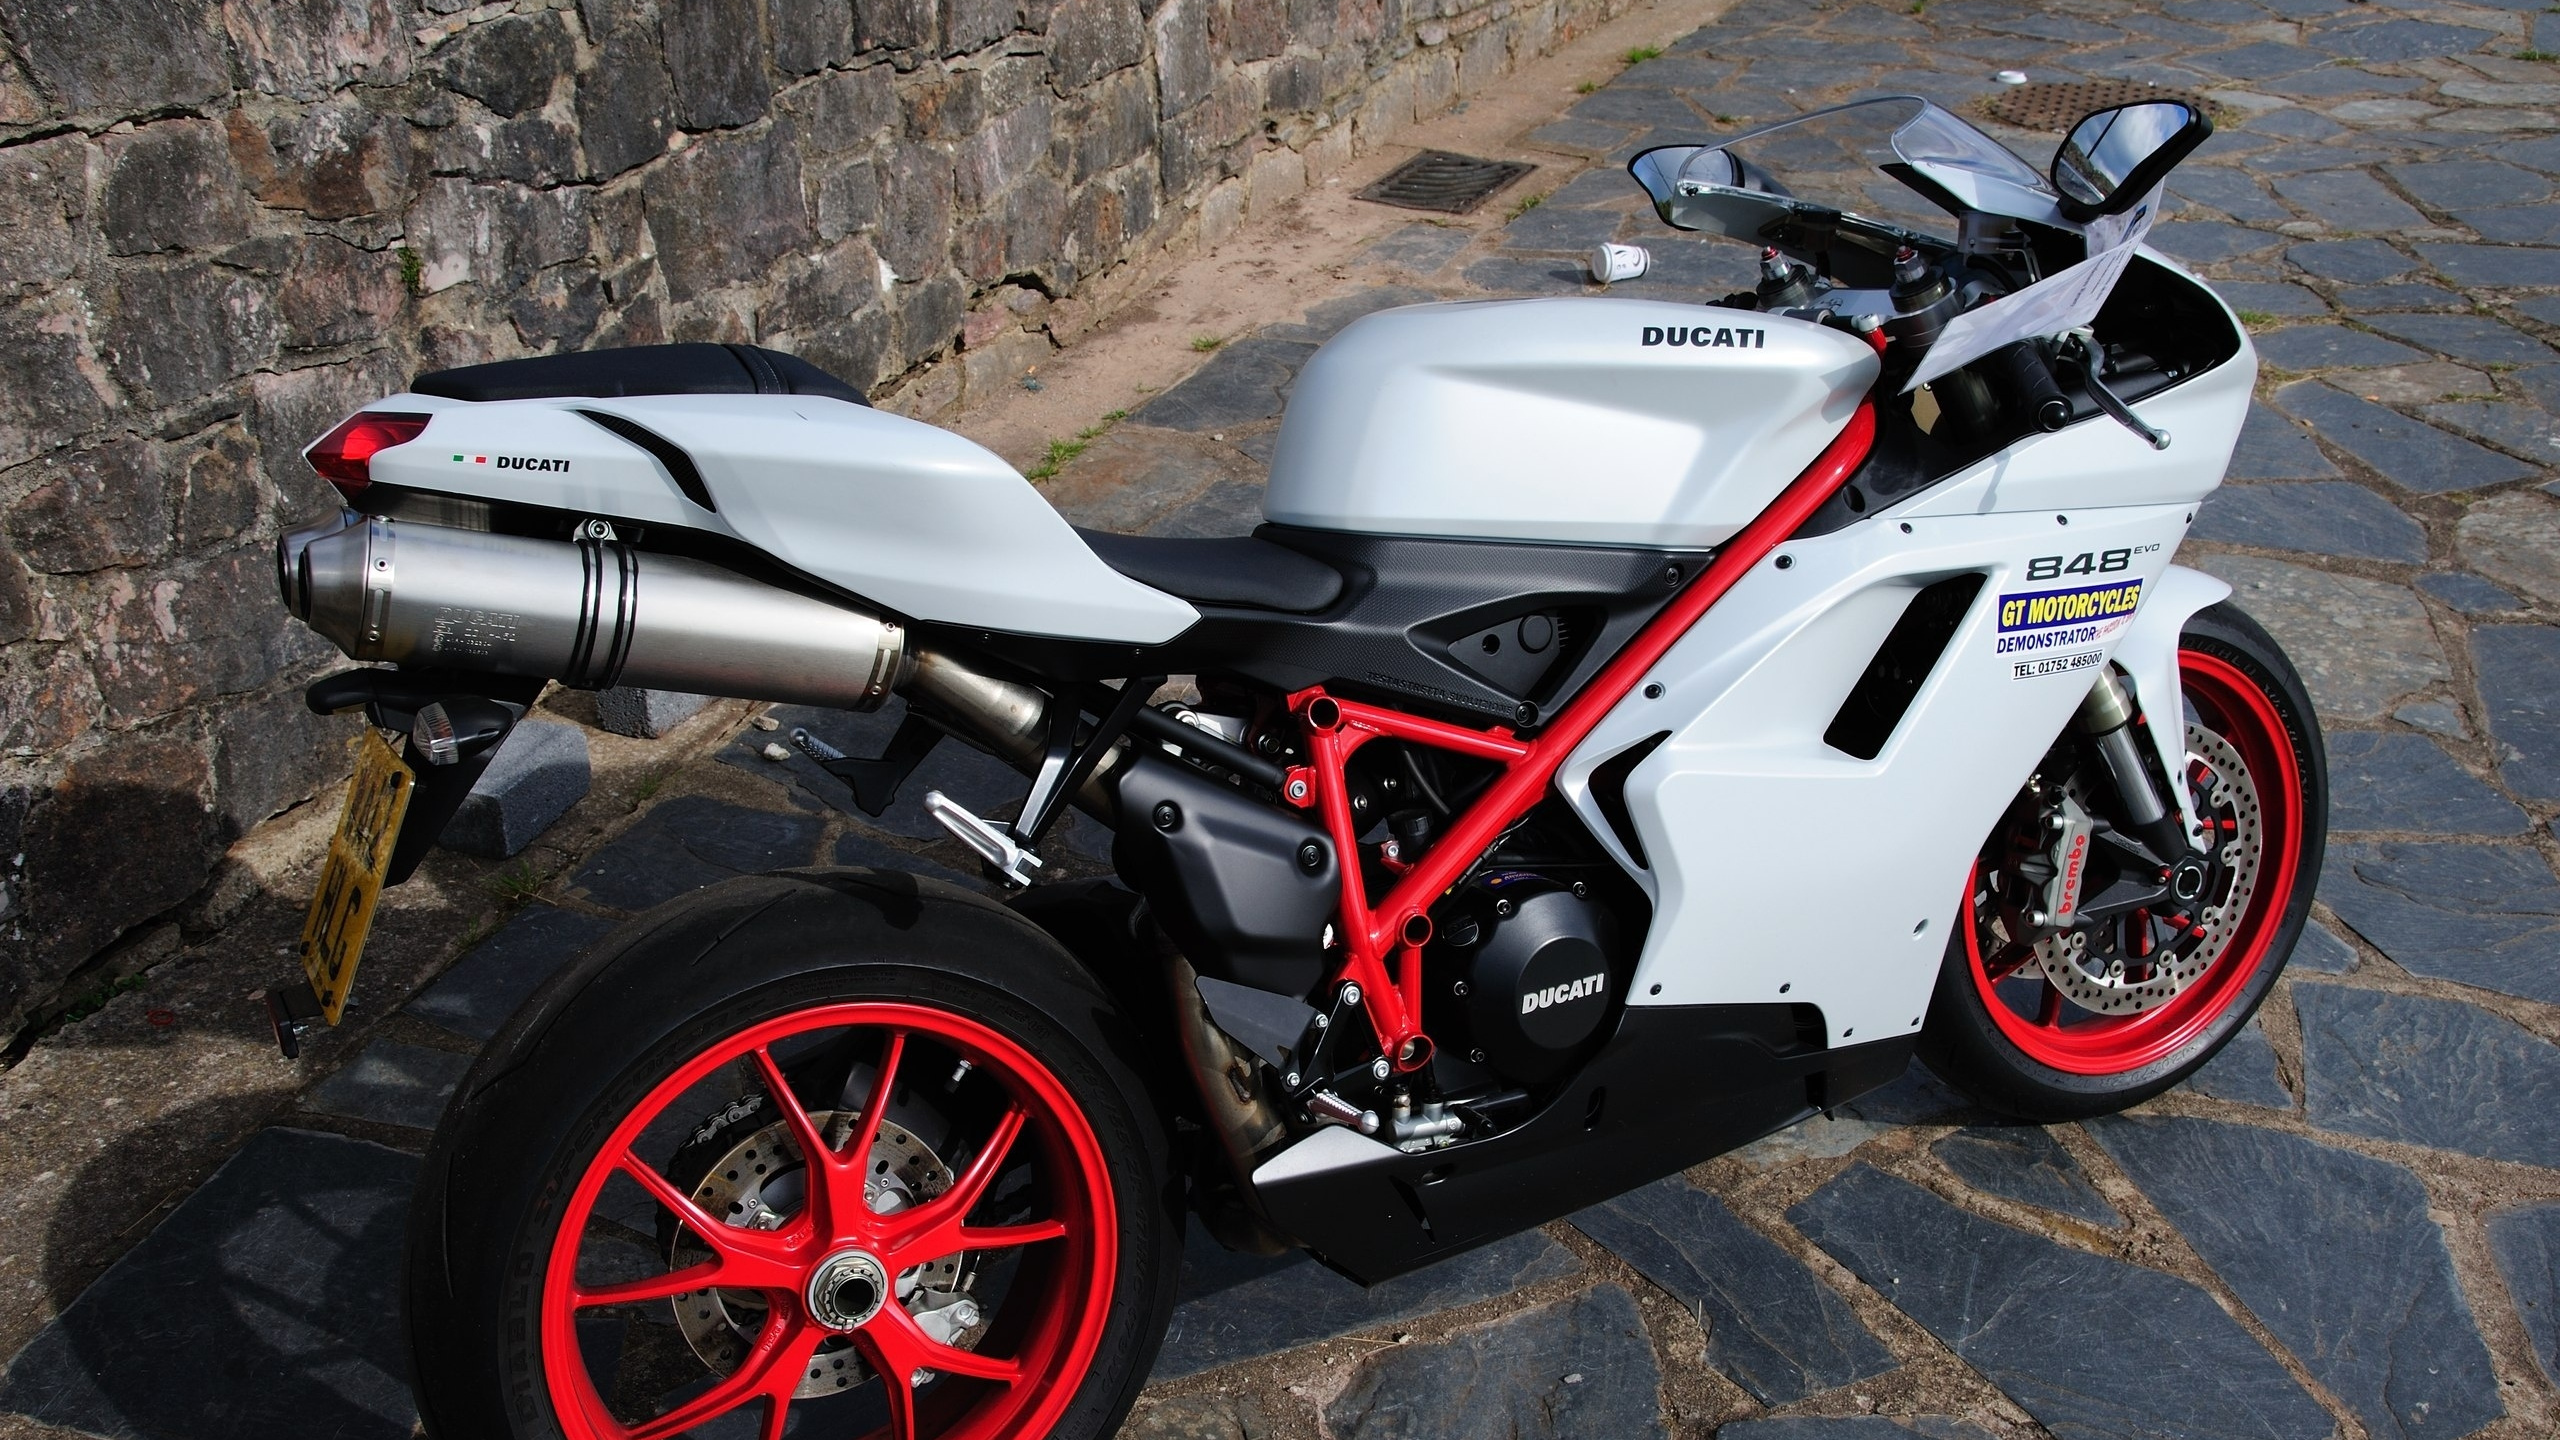 Ducati Streetfighter(杜卡迪街头霸王)848 2012 - 25H.NET壁纸库